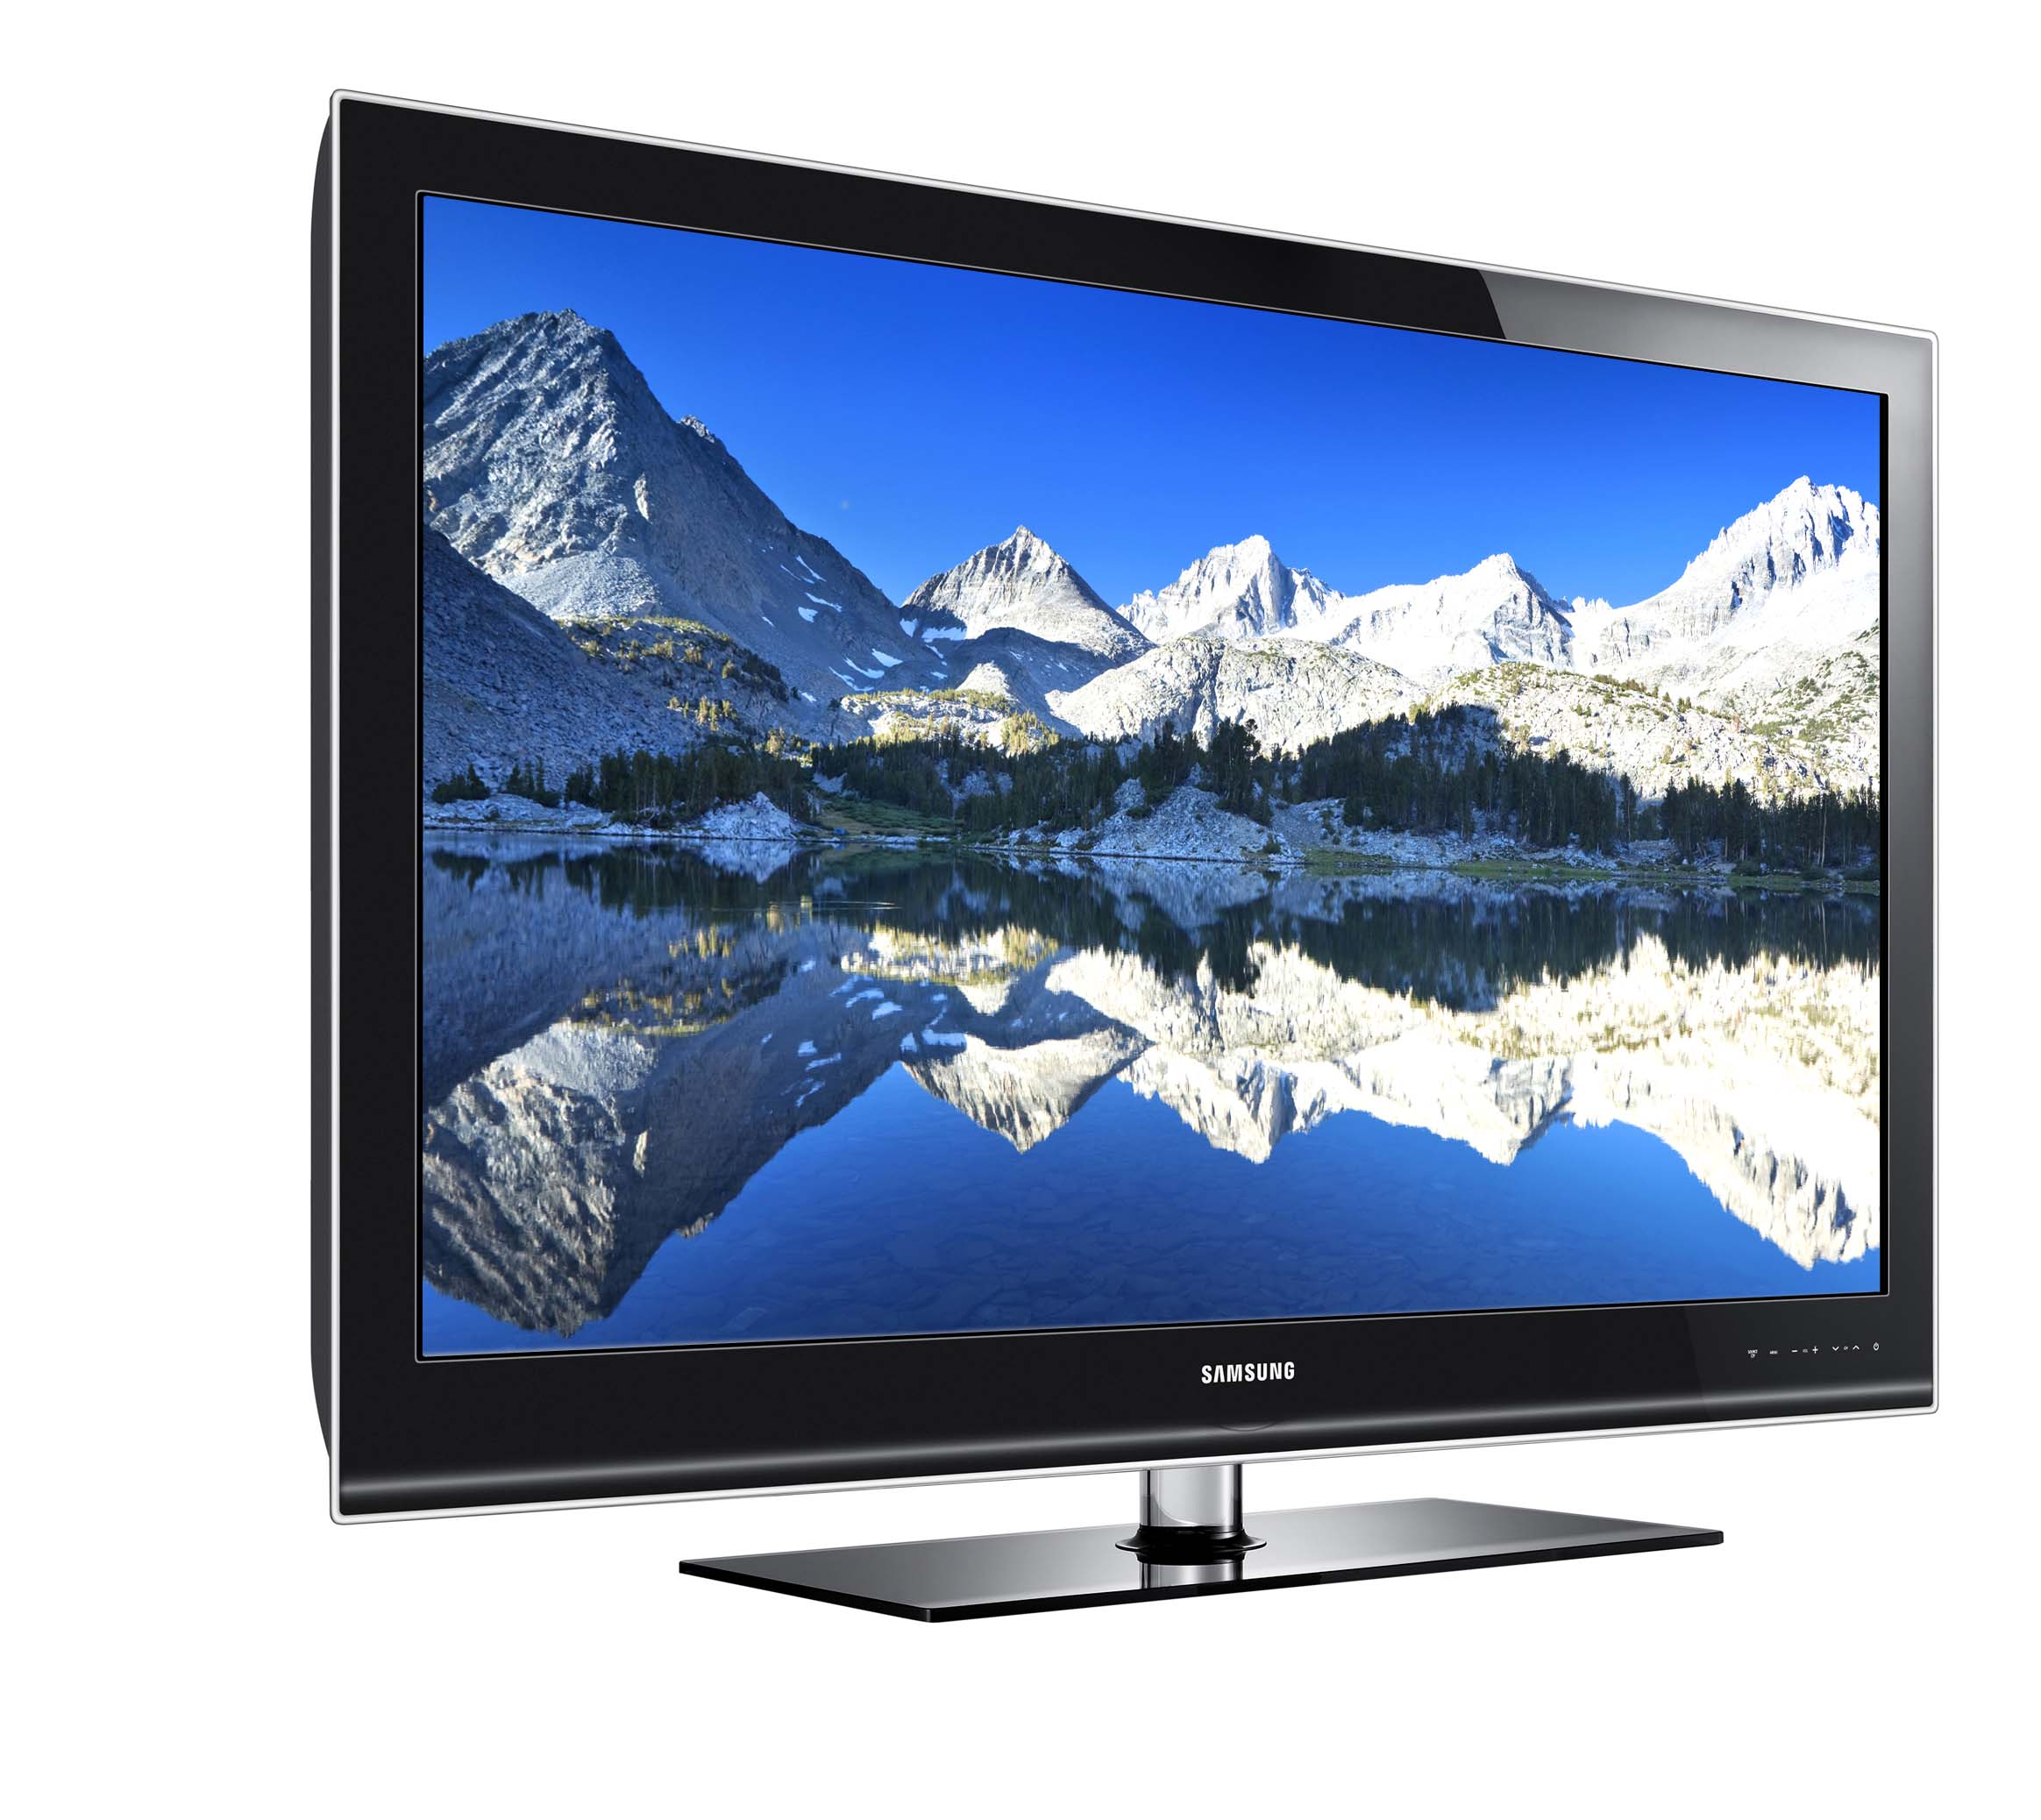 Телевизор 52 см. Samsung LCD TV le46f8. Samsung le52f96bd. ТВ самсунг 32 дюйма. Телевизор Samsung le-52a556p1f 52".